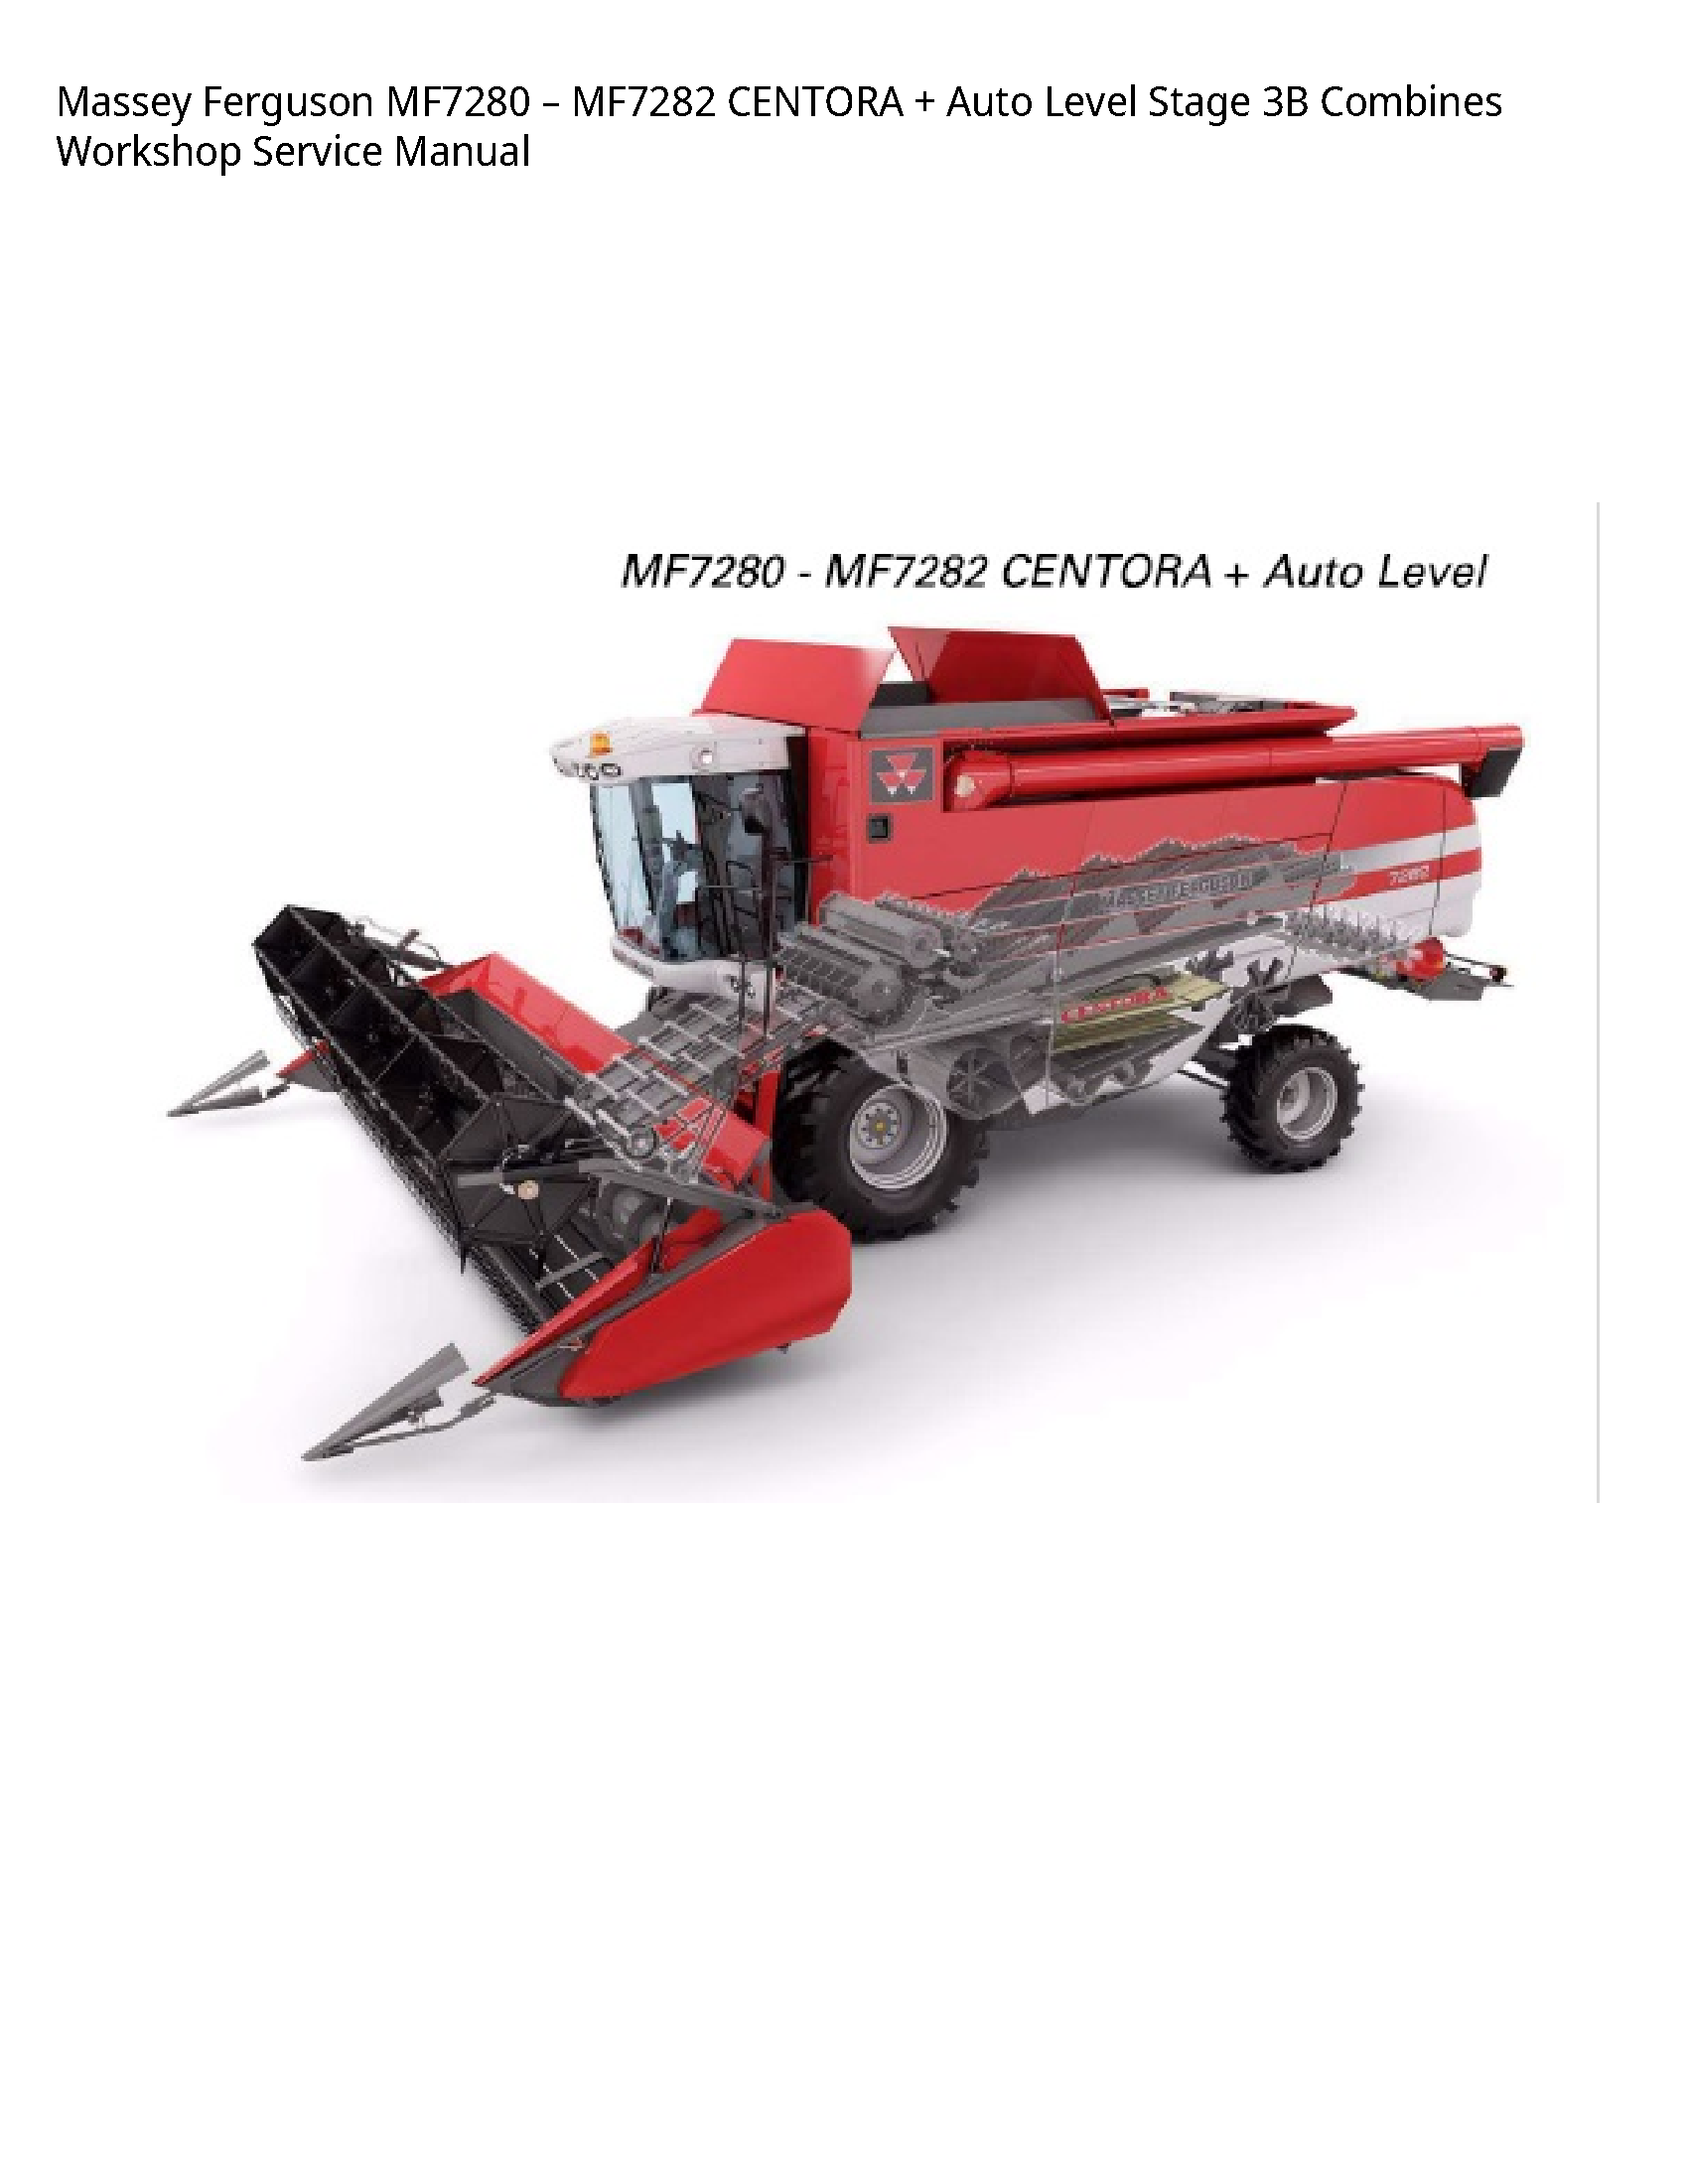 Massey Ferguson MF7280 CENTORA Auto Level Stage Combines Service manual